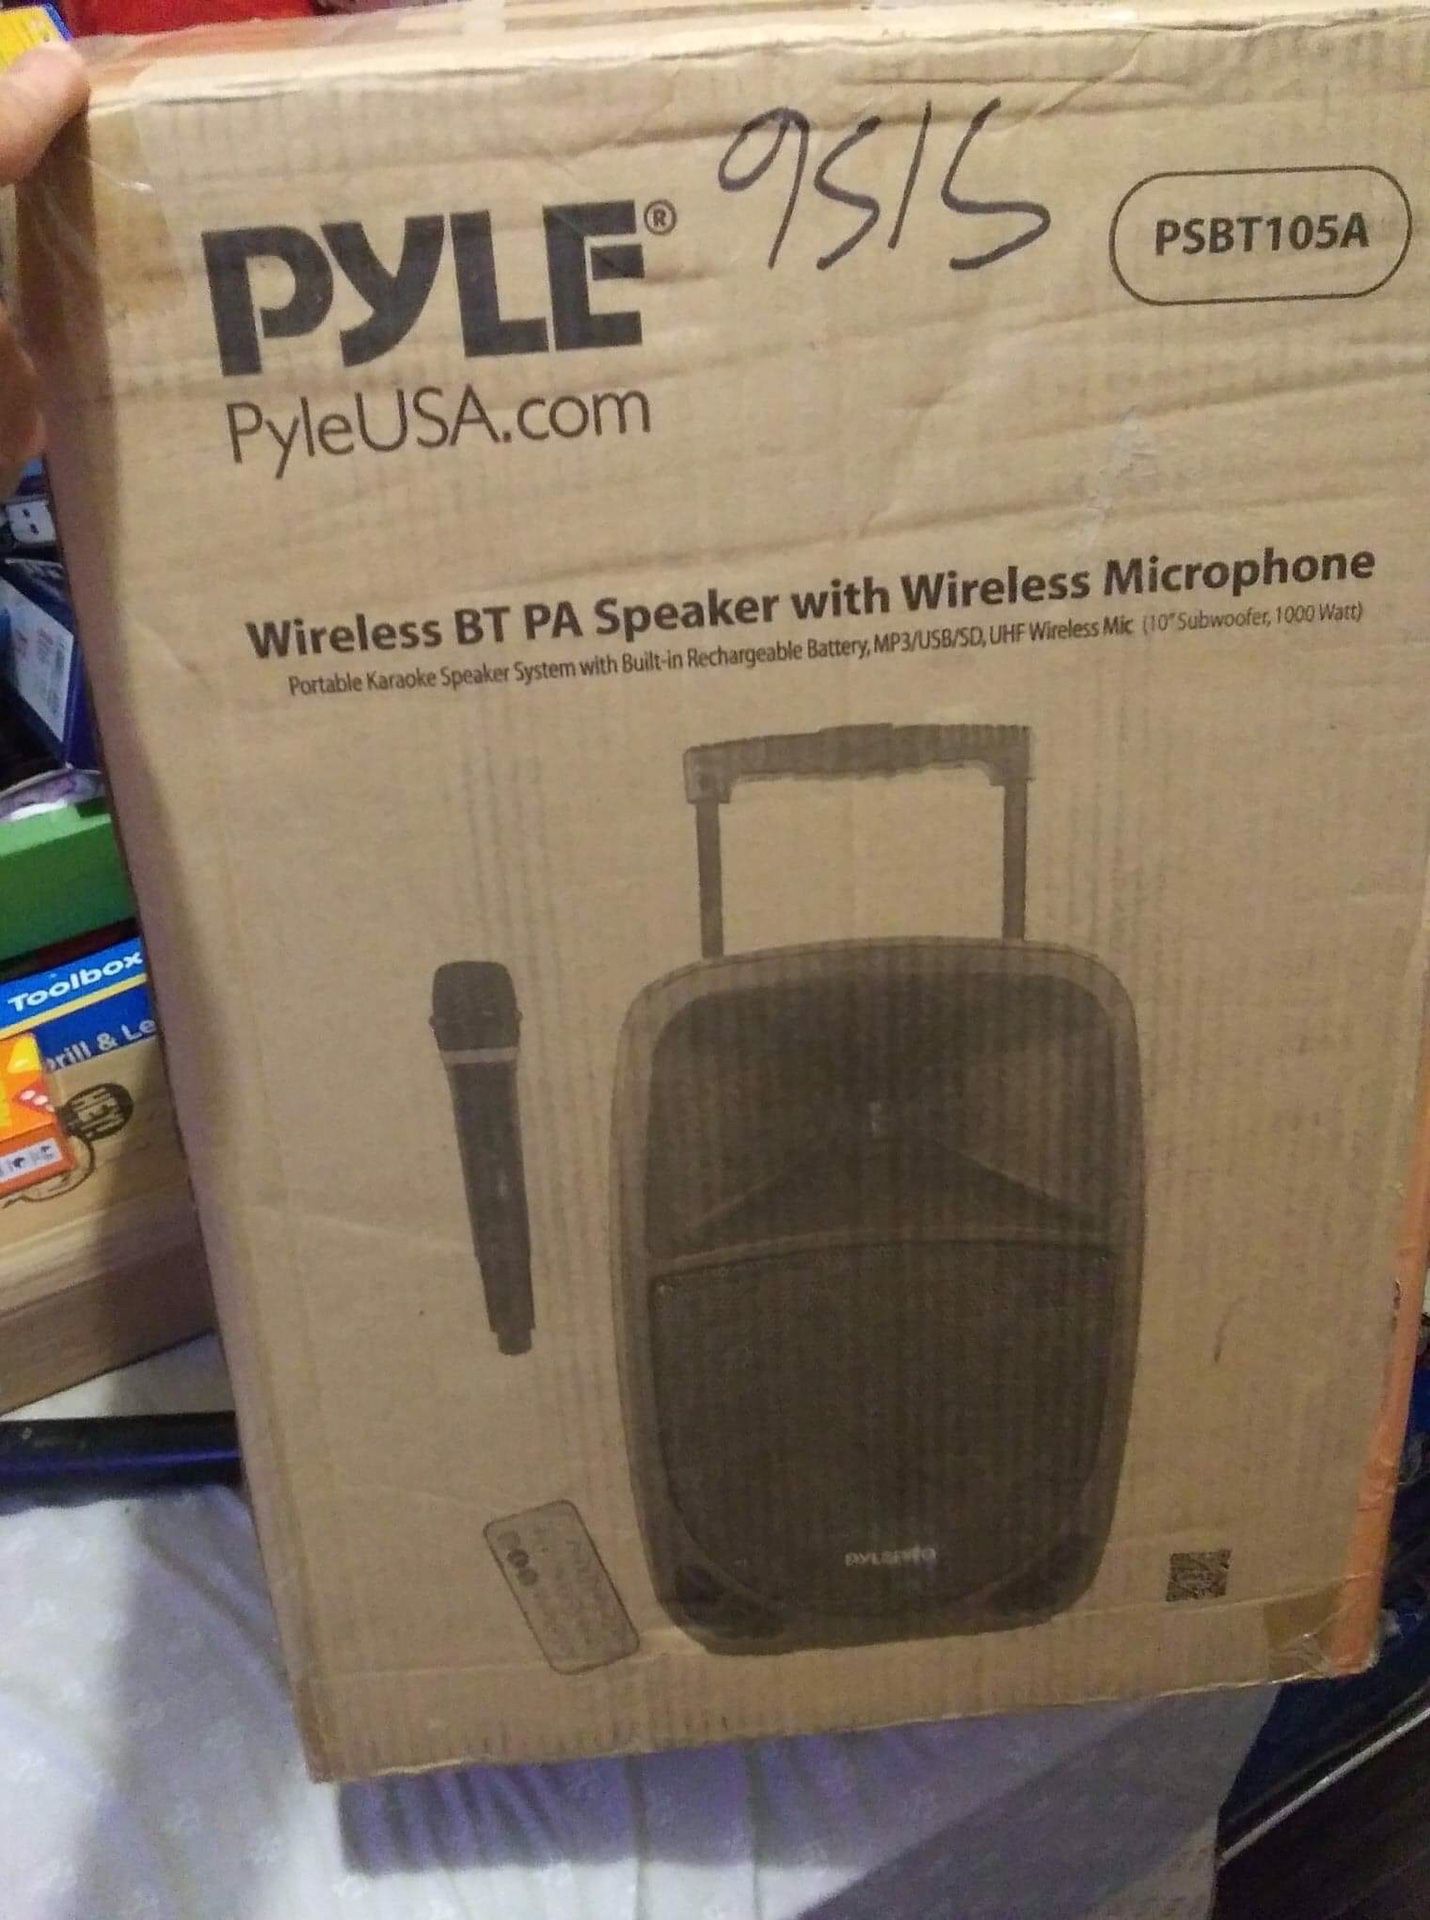 Pyle USA speaker